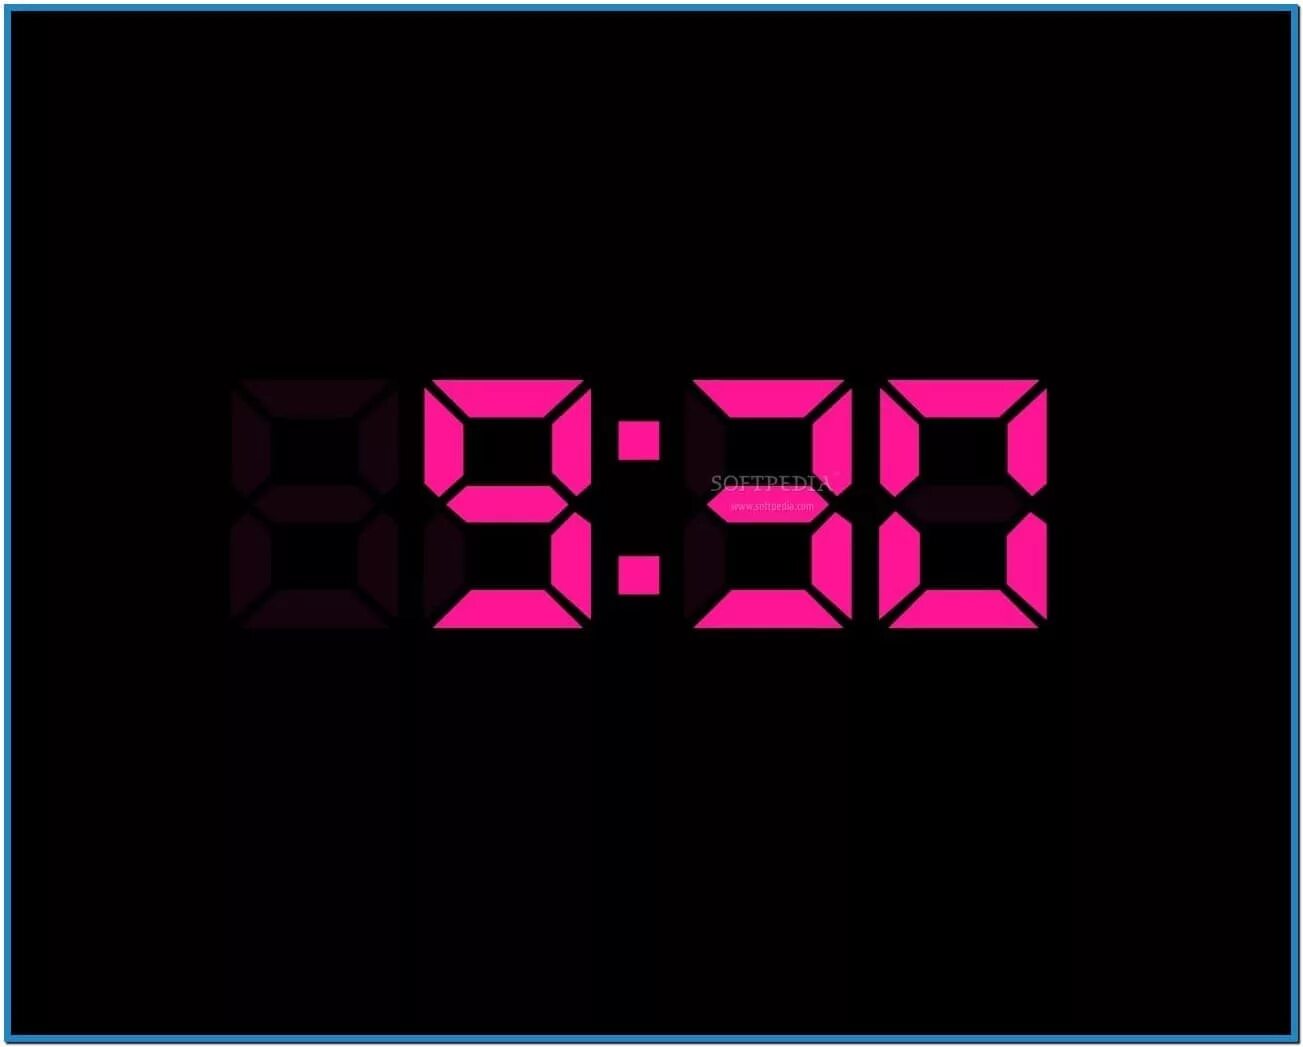 Часы Digital Clock 200730138828.4. Цифровые часы на экран. Скринсейвер электронные часы. Скринсейвер цифровые часы. 9 30 вечера